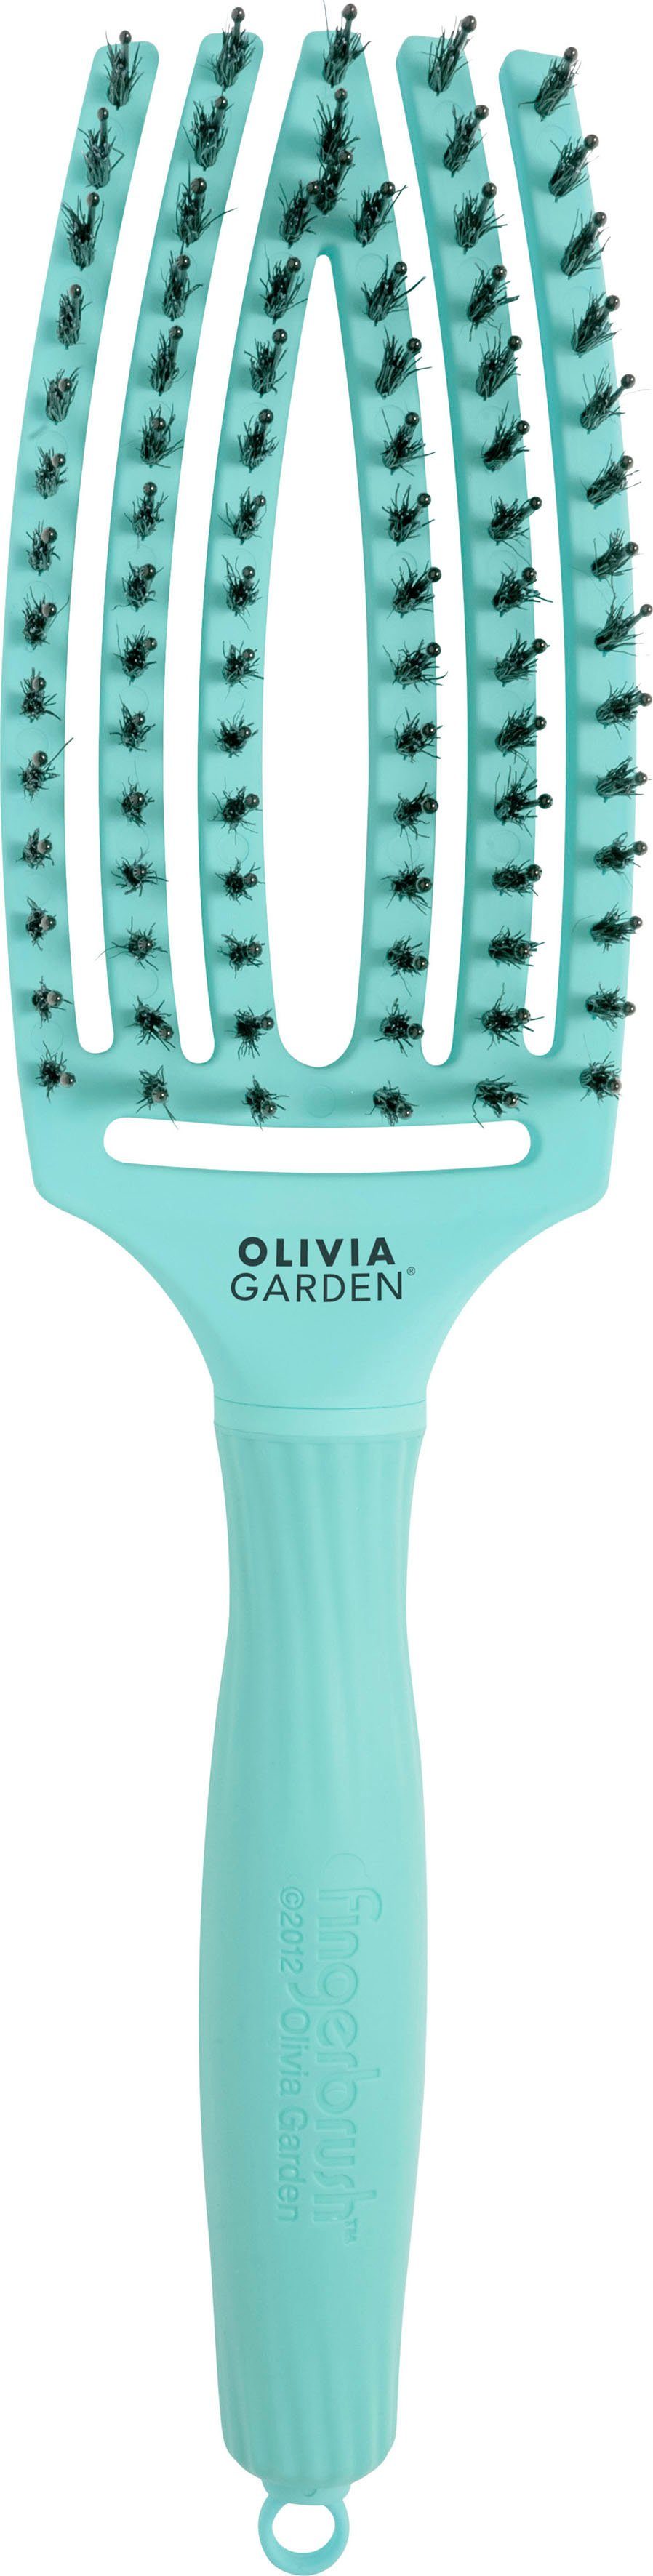 OLIVIA GARDEN Haarbürste Fingerbrush Combo Medium mint